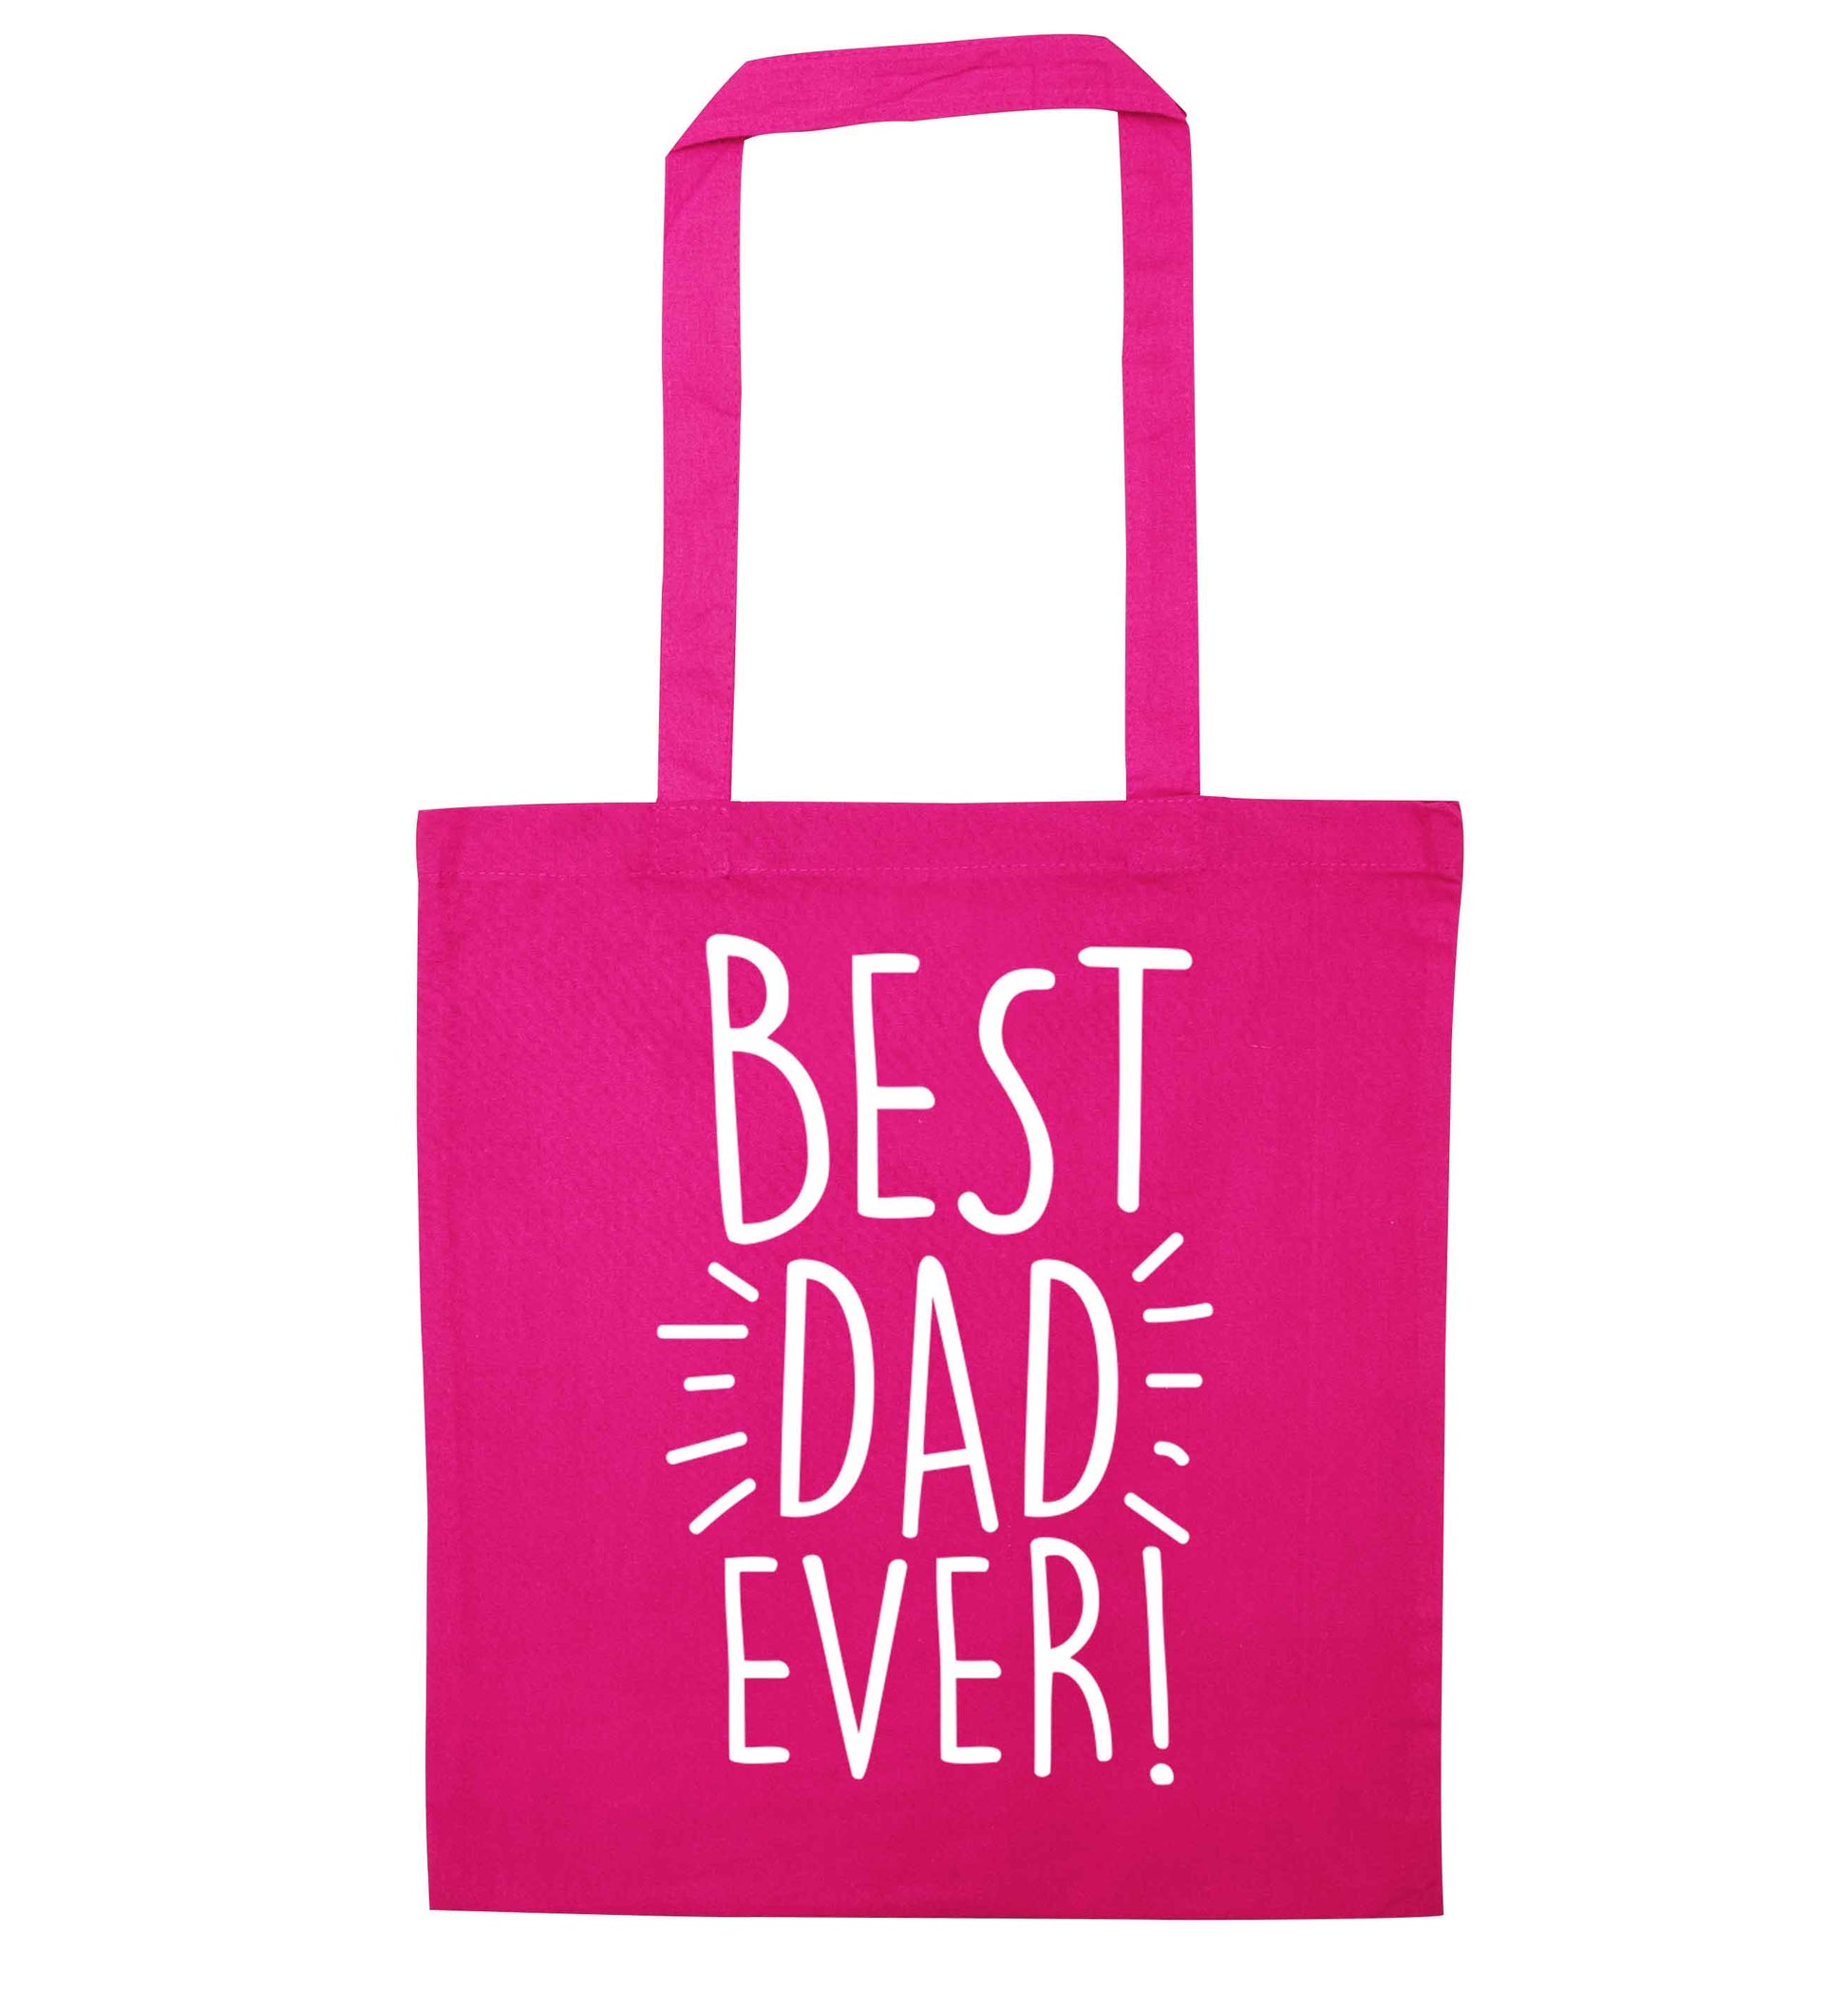 Best dad ever! pink tote bag